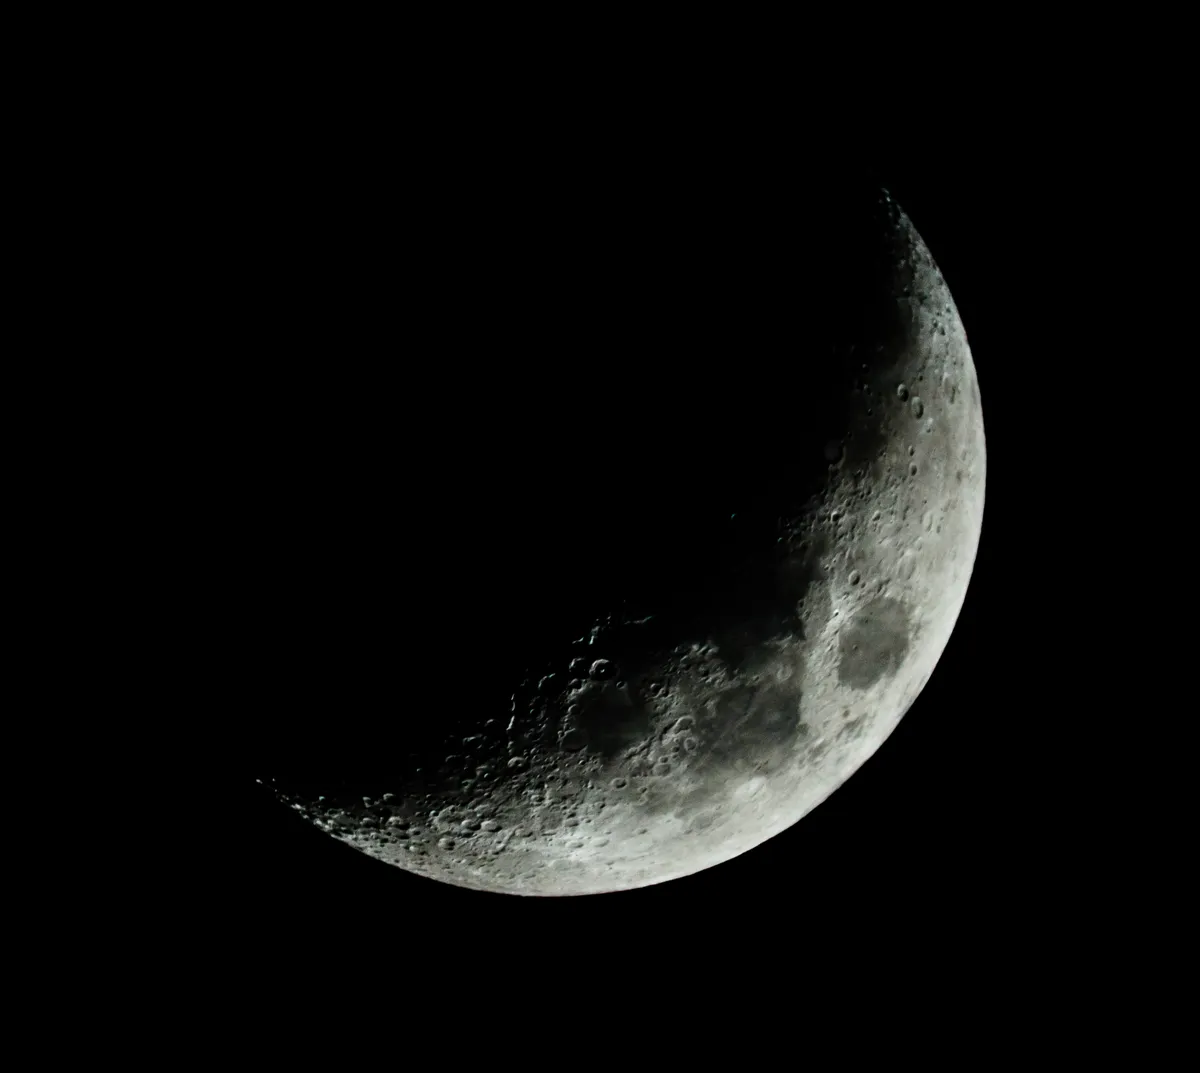 St. Patrick's Moon by Brian R Bugler, Worth Matravers, Dorset. Equipment: Canon 5D mkIII, Celestron 127SLT.